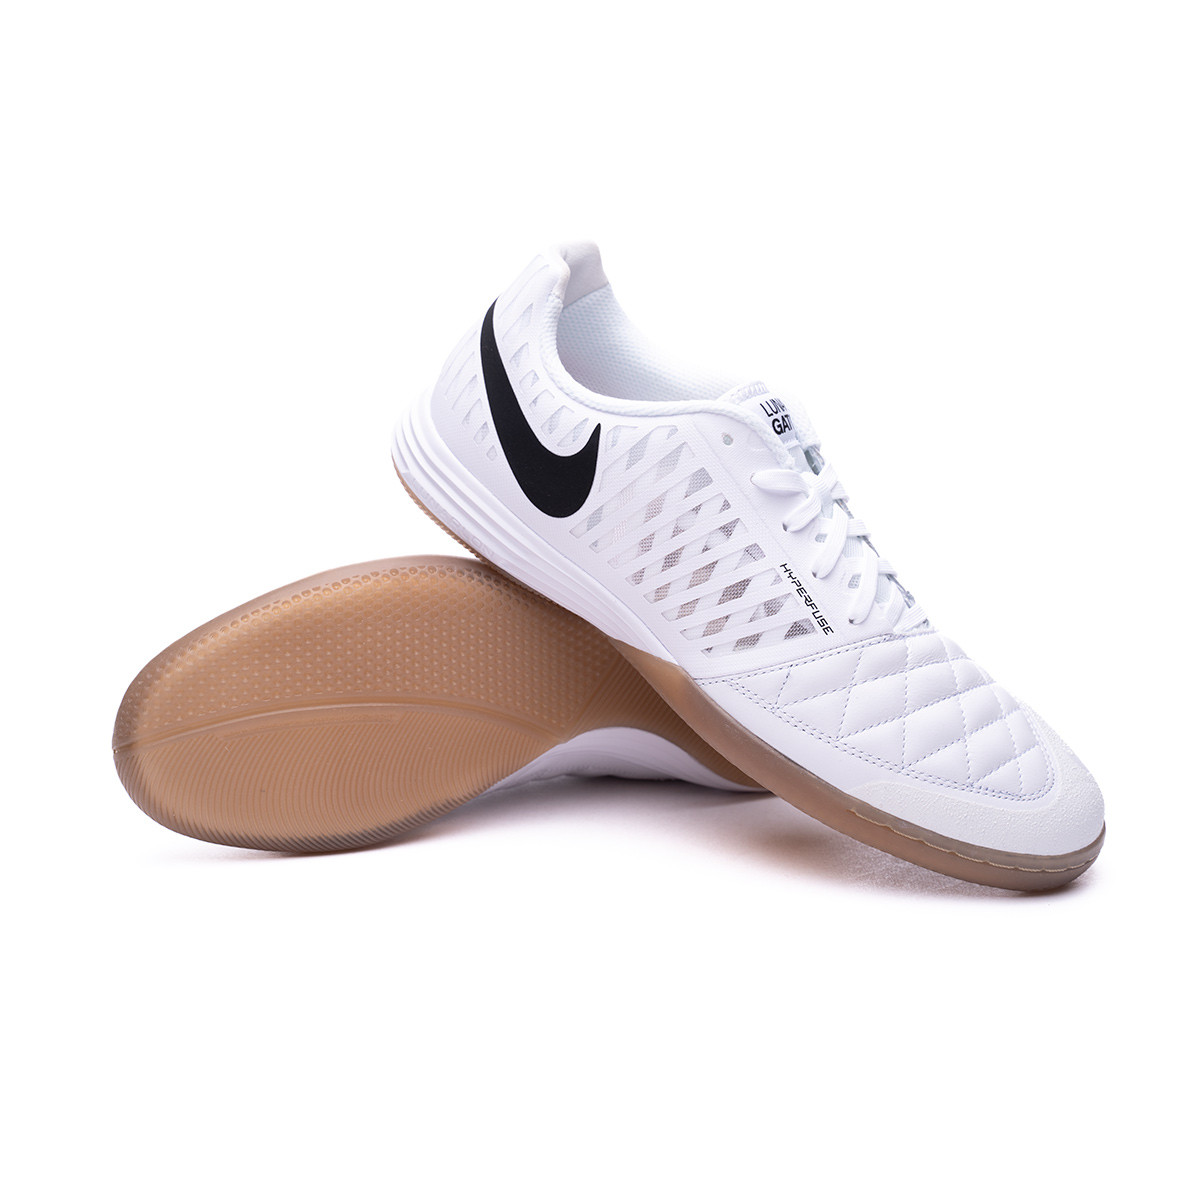 Chaussures de futsal homme Lunar Gato II IC Nike